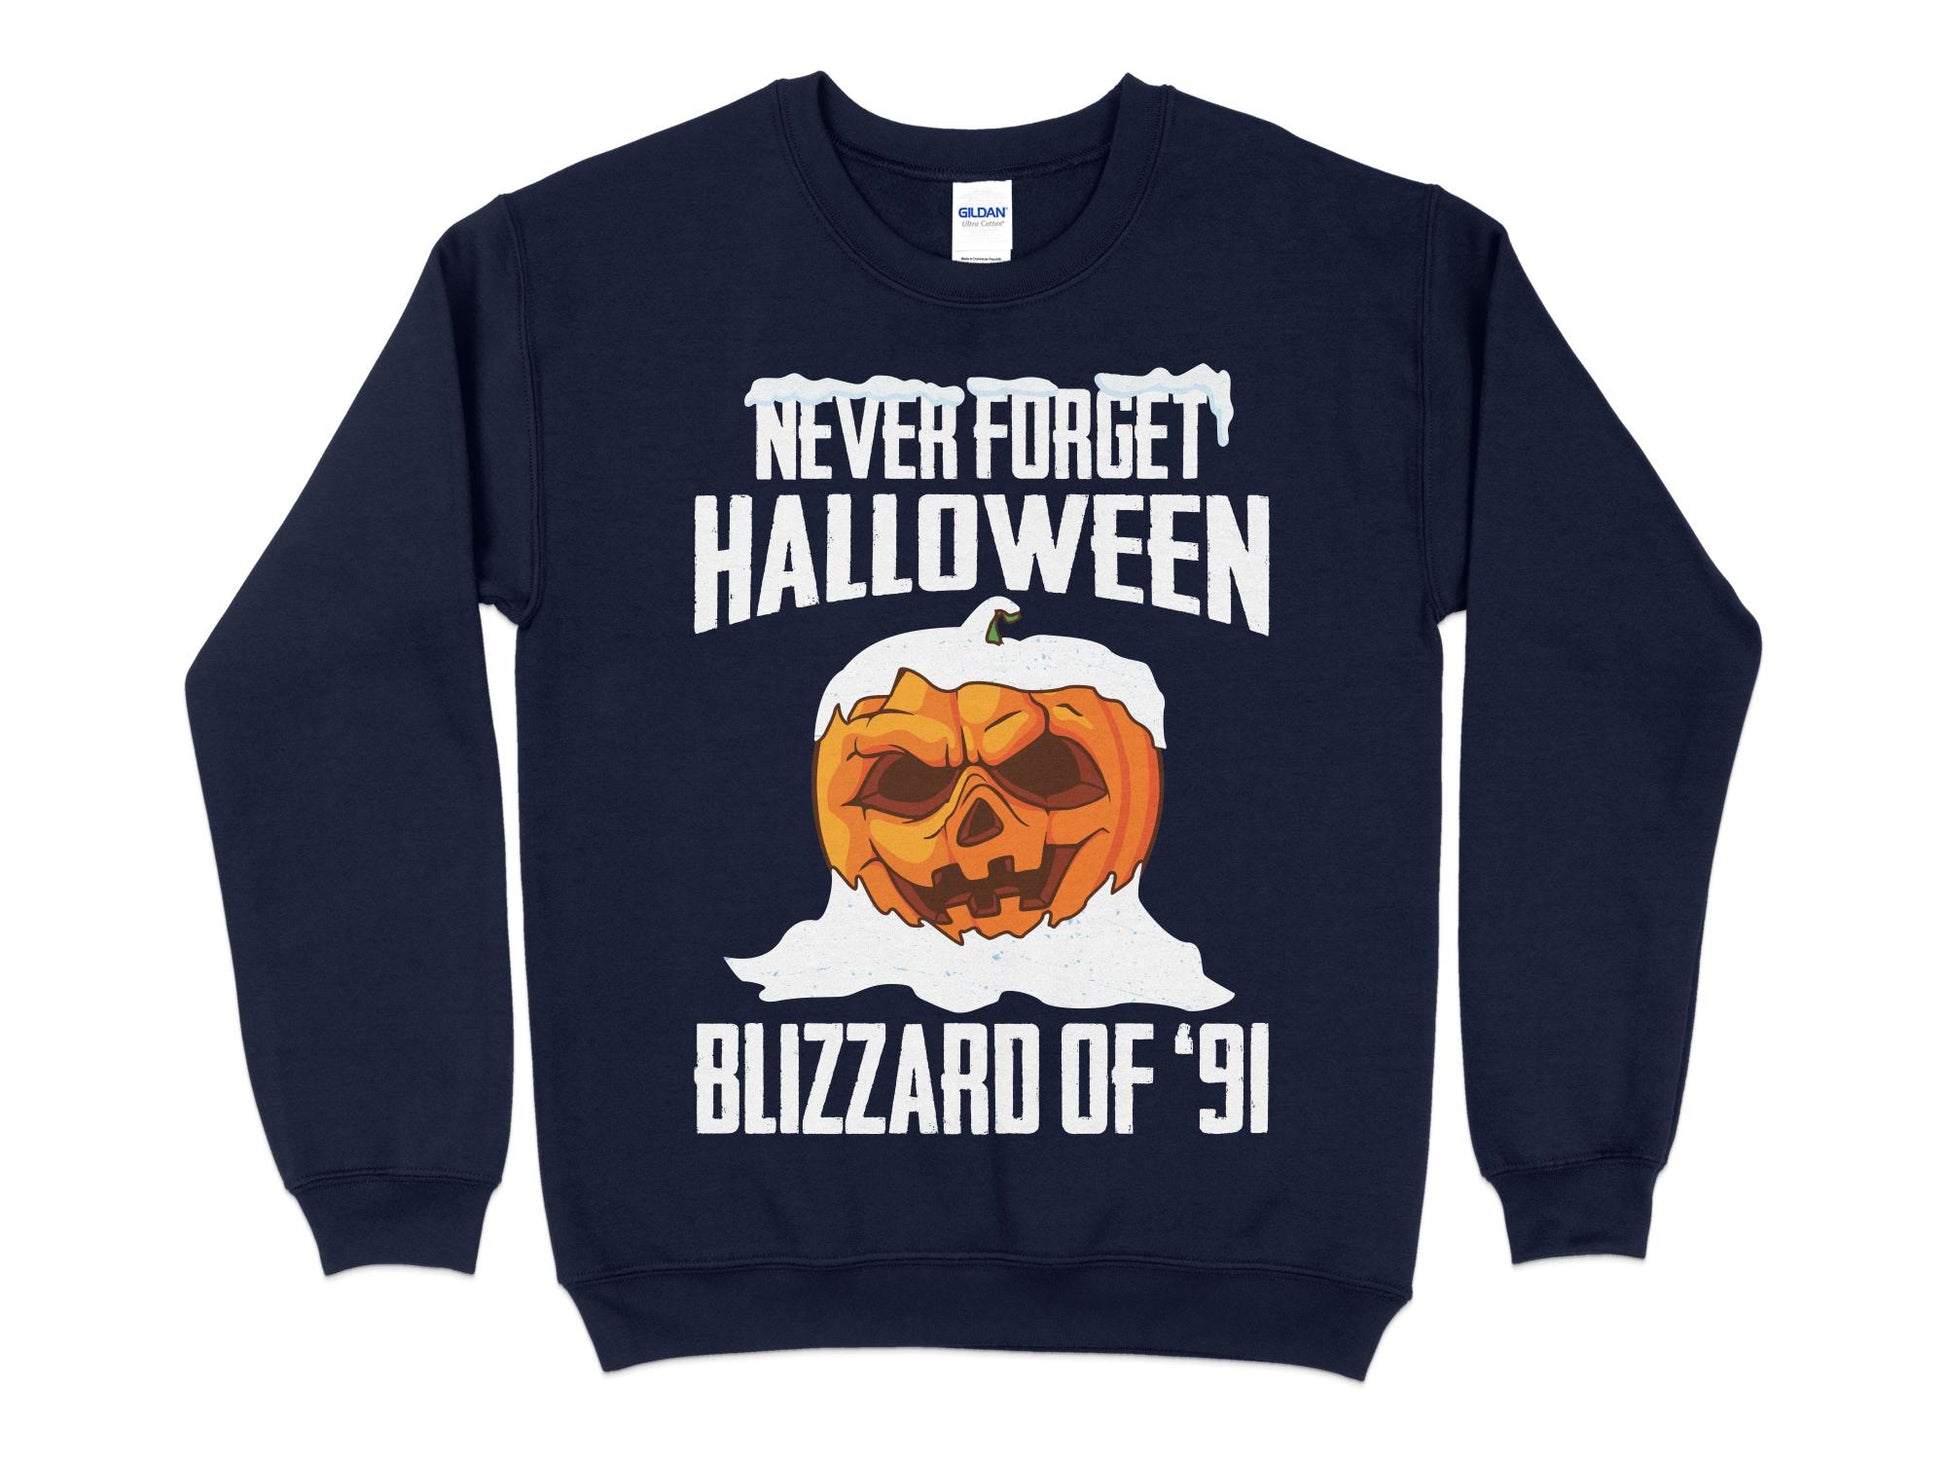 Minnesota Blizzard Halloween 1991 Sweatshirt, navy blue